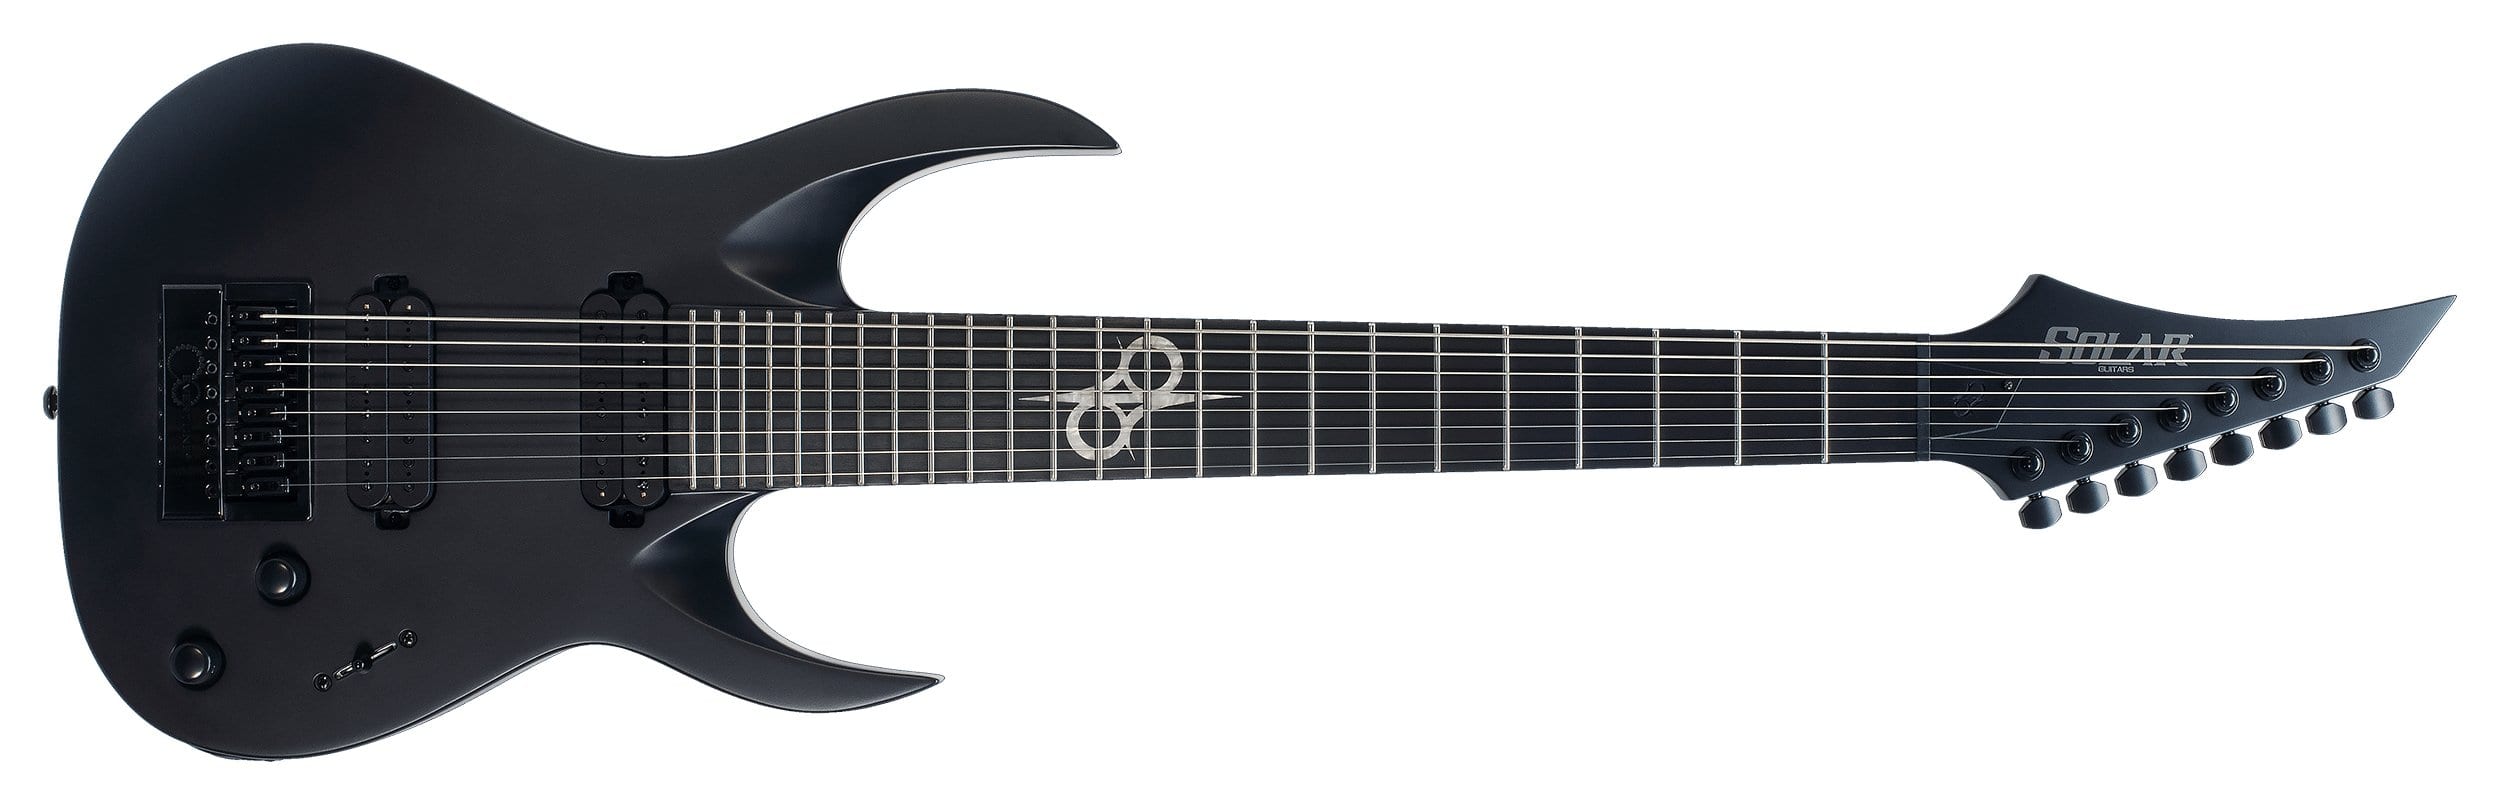 Solar Guitars A1.8C - An 8-string beast of a guitar 